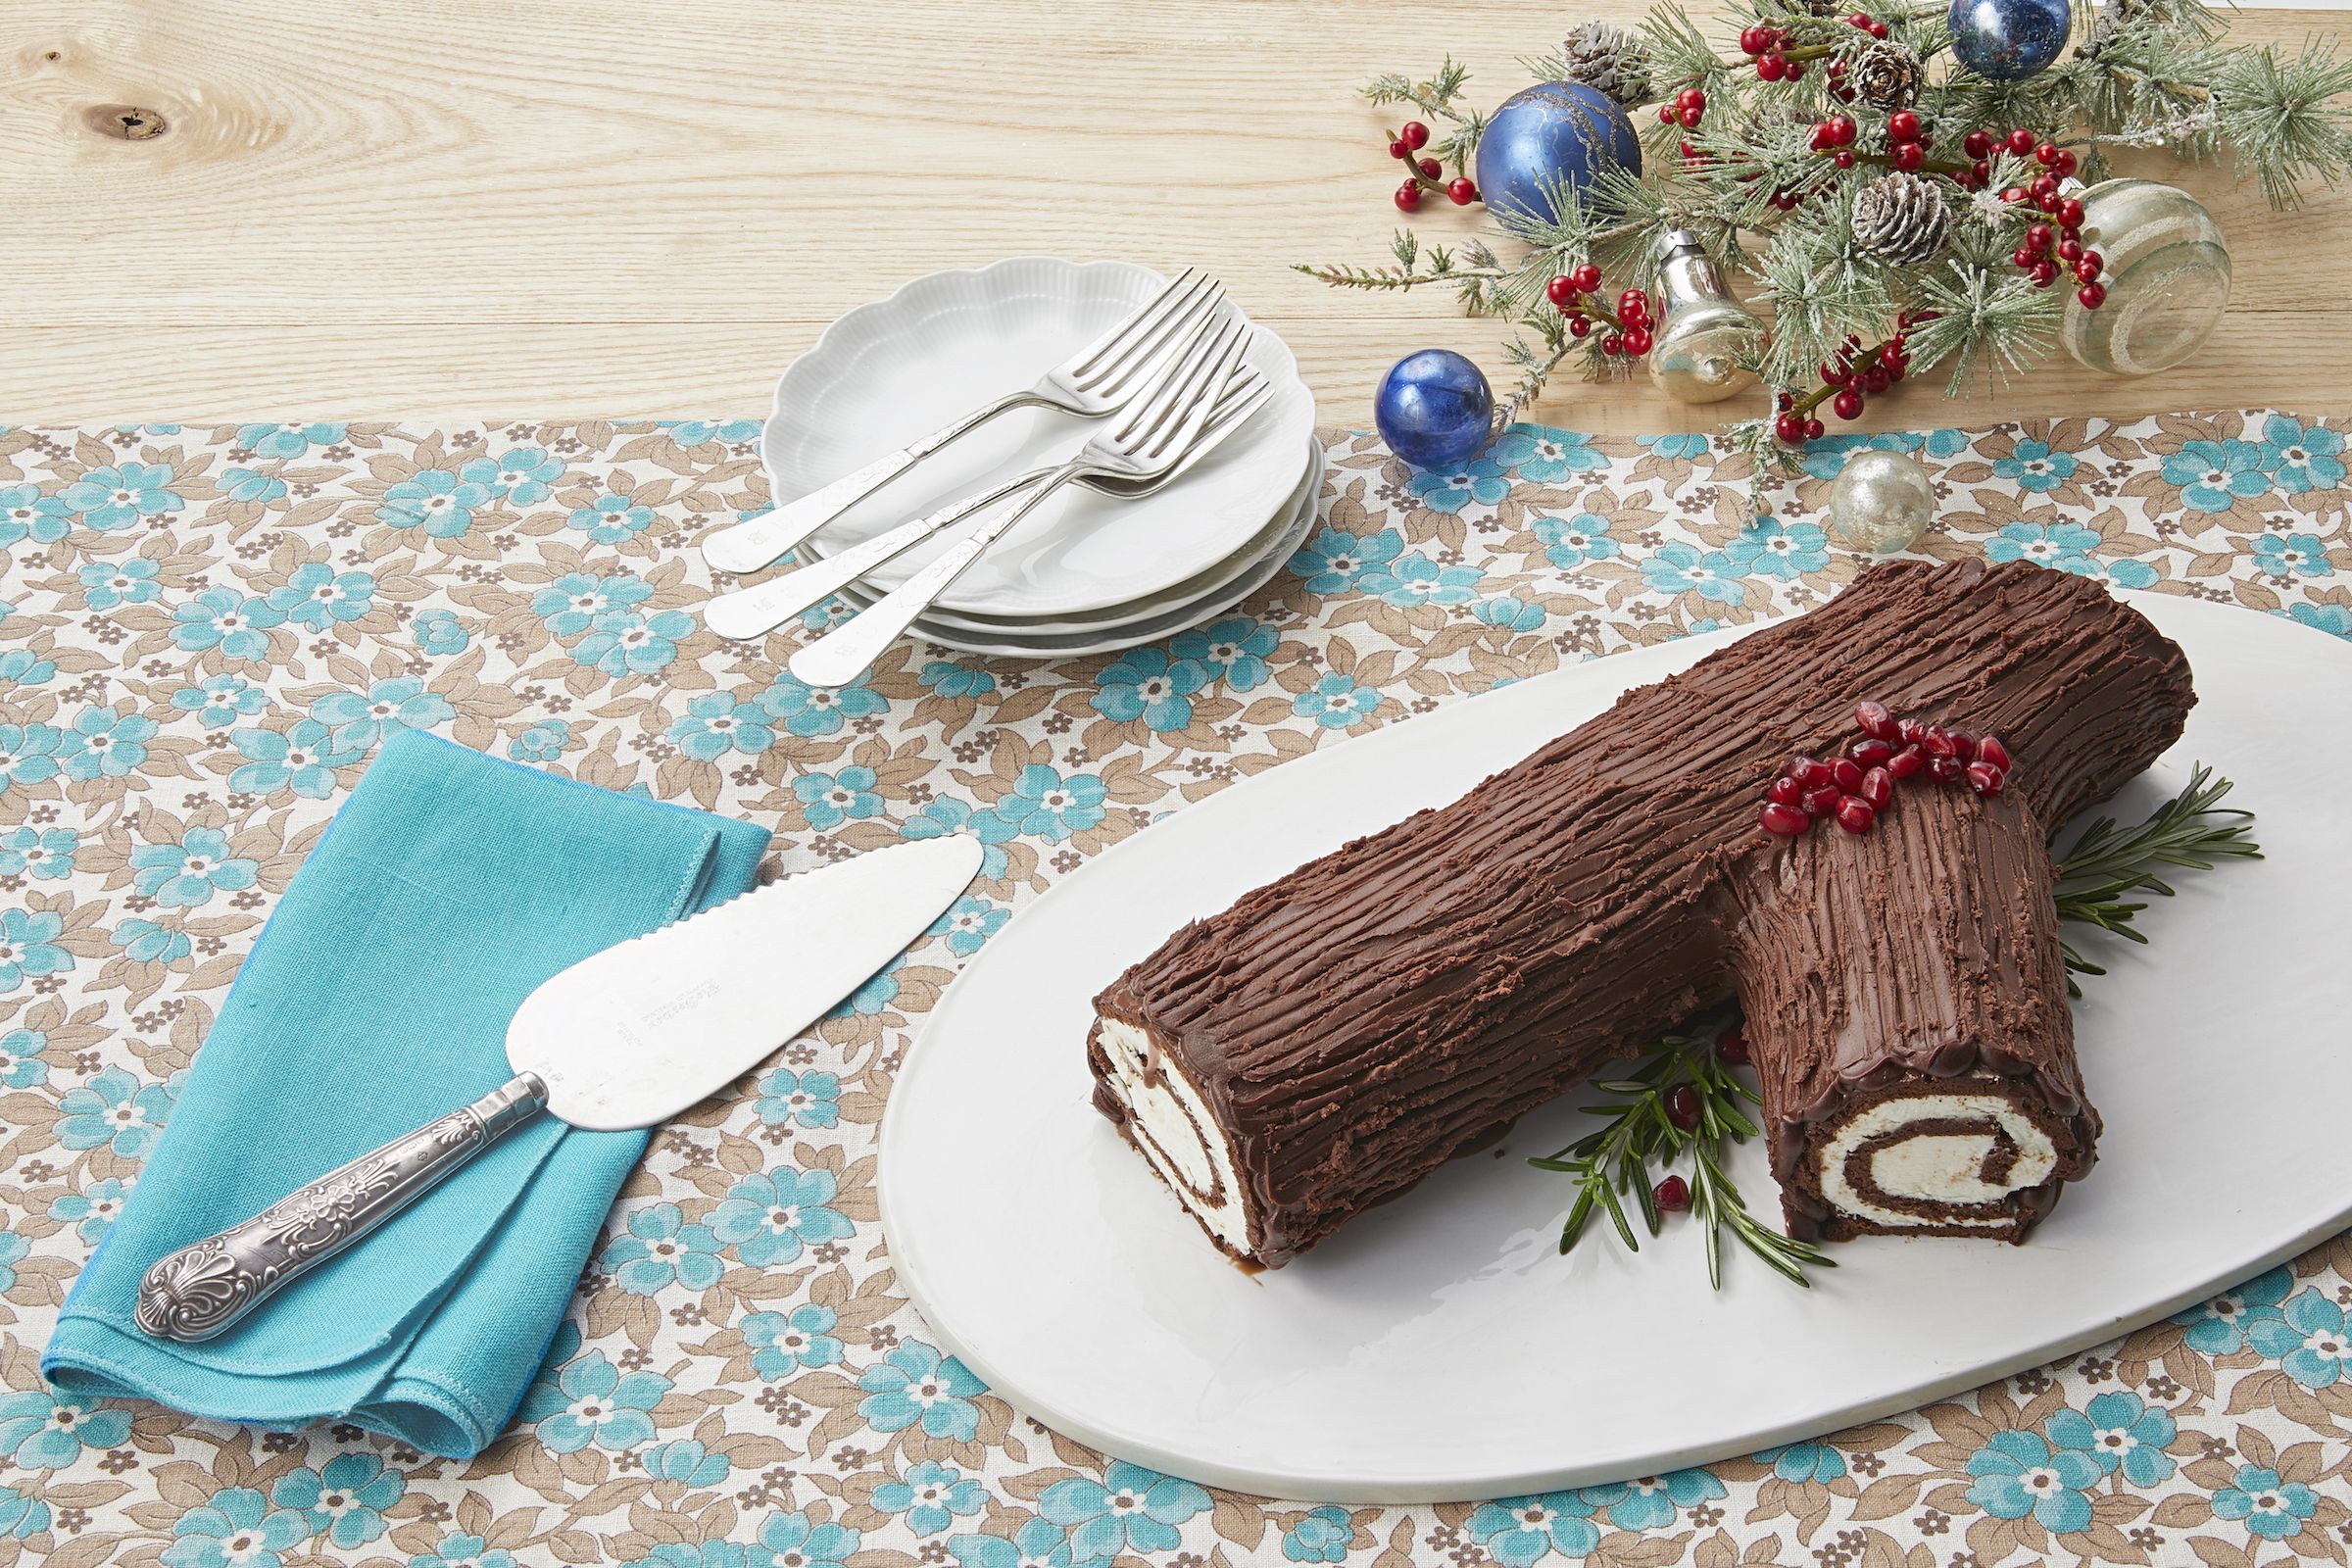 Classic Buche de Noel Recicpe | Yule Log Cake | Holiday Christmas